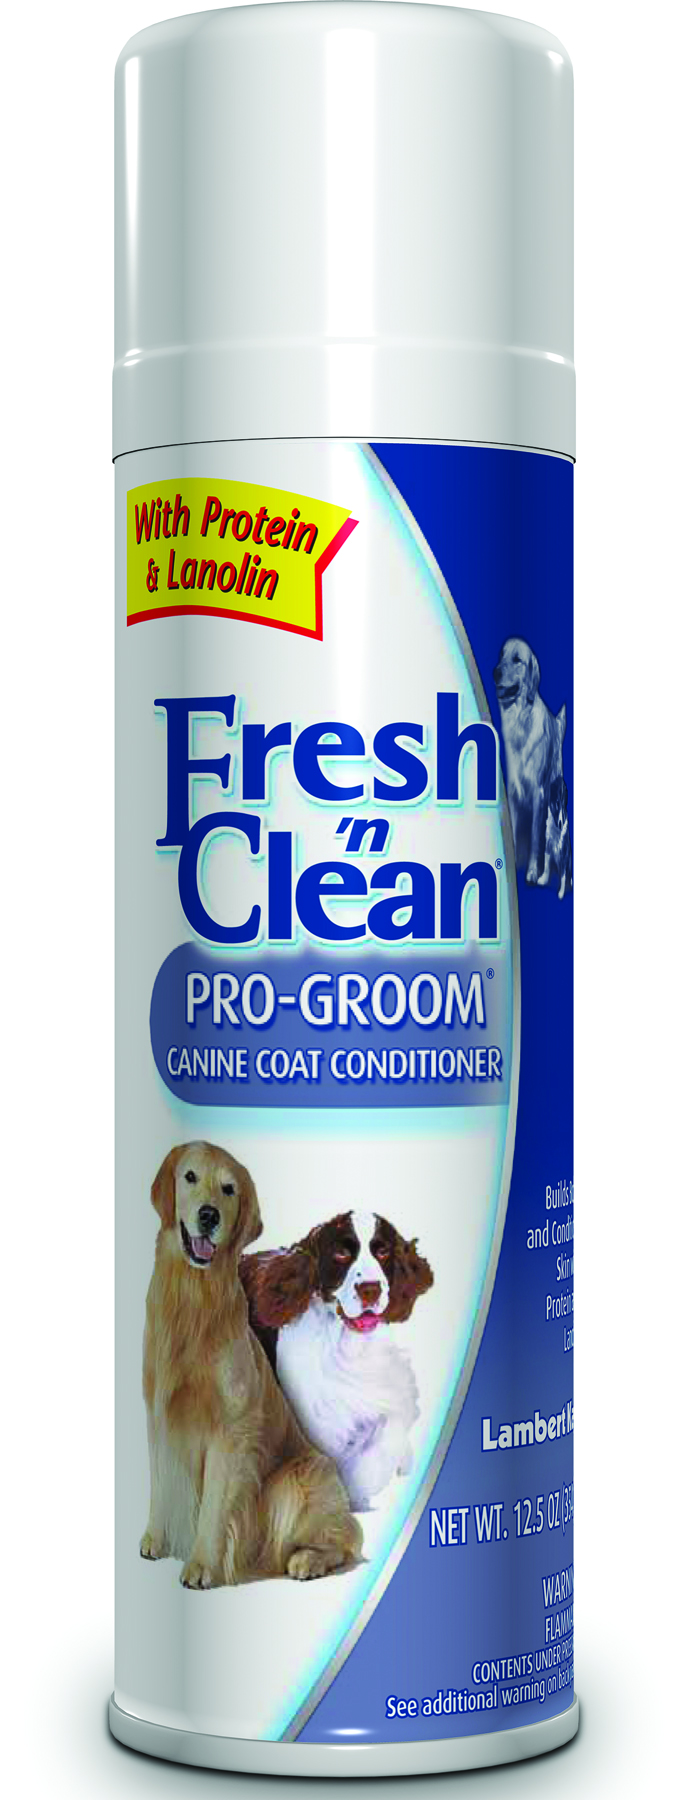 Pro-Groom coat conditioner for after dog shampoos - 12.5 oz